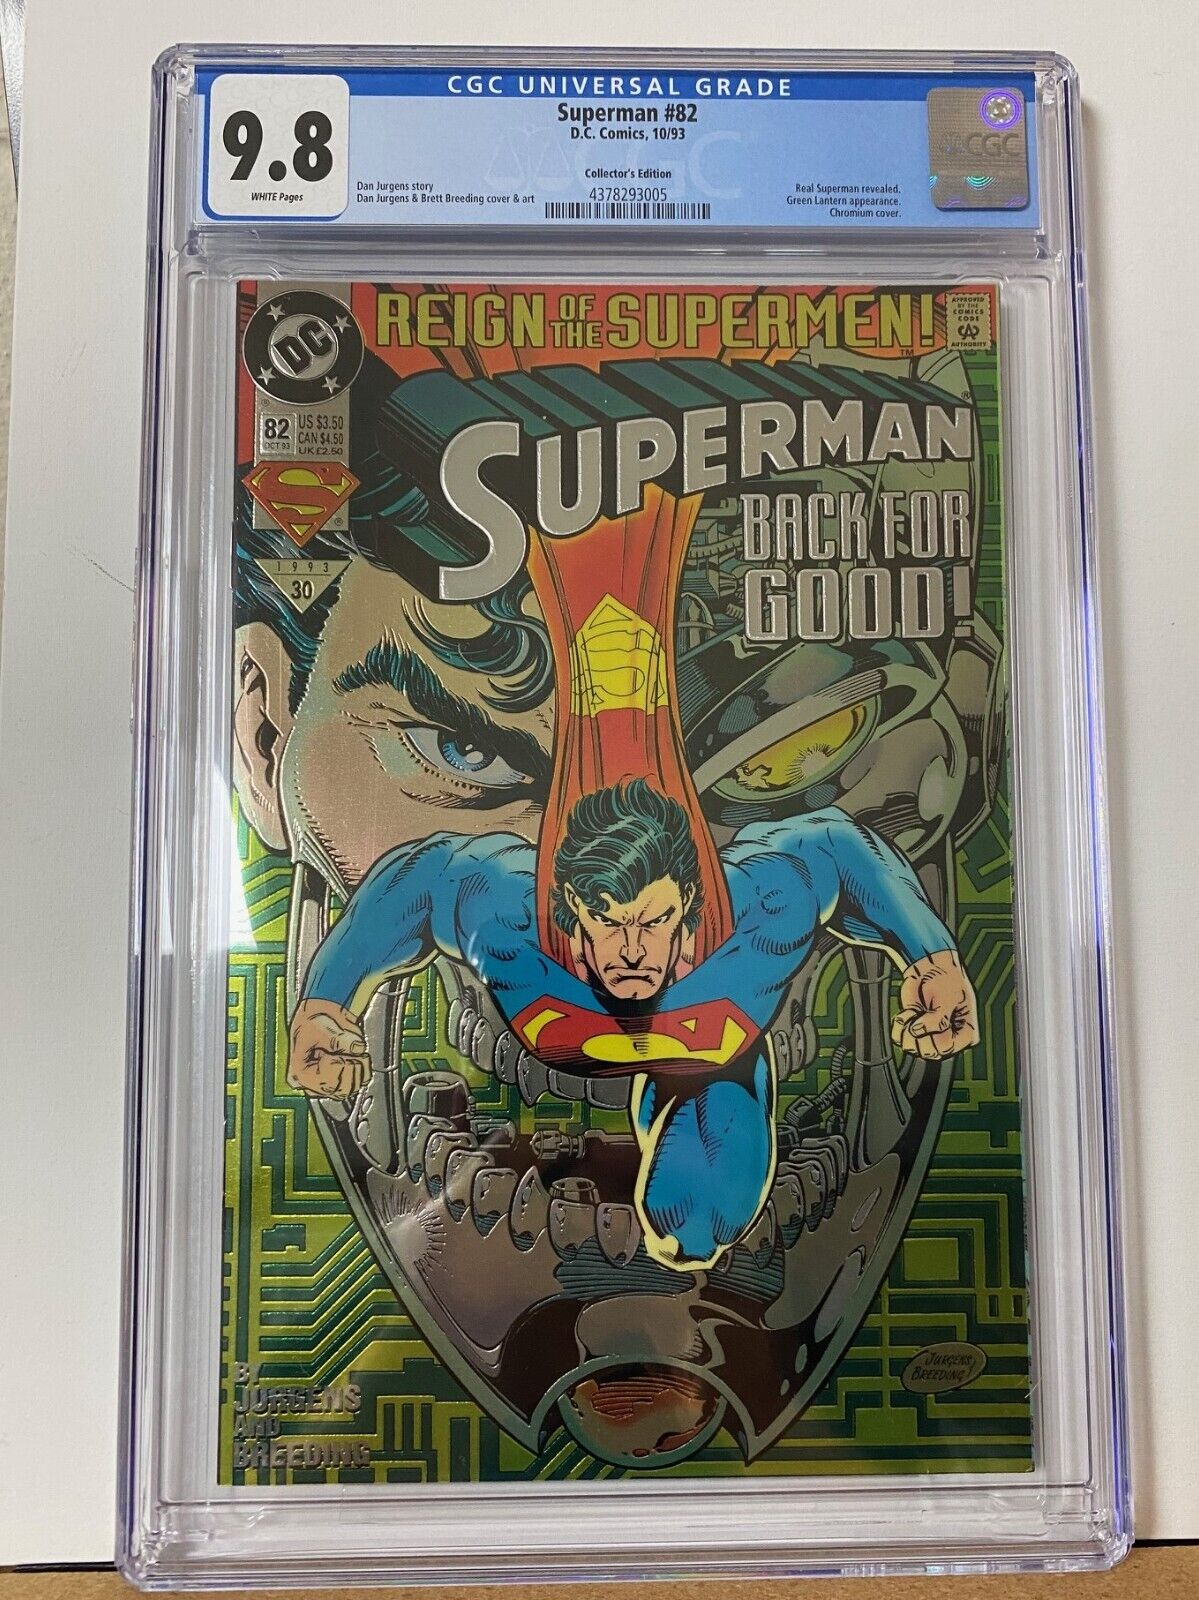 Superman #82 10/93 CGC 9.8 Real superman/chromium cover